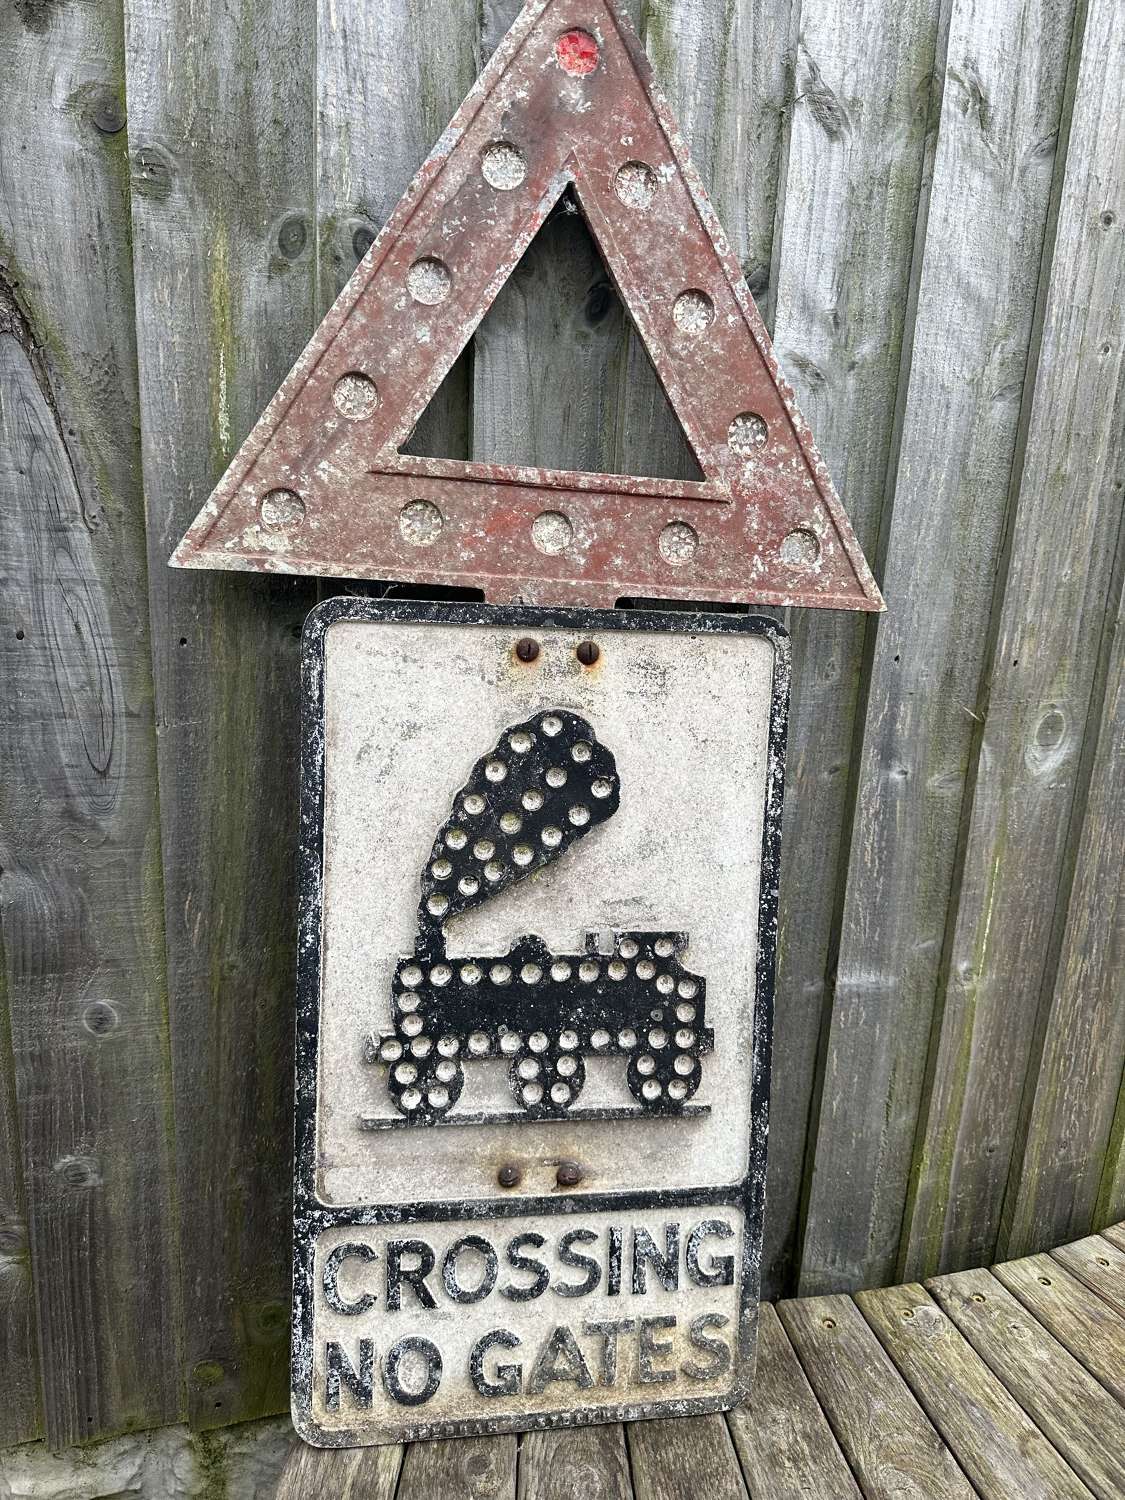 Original example crossing cast road sign